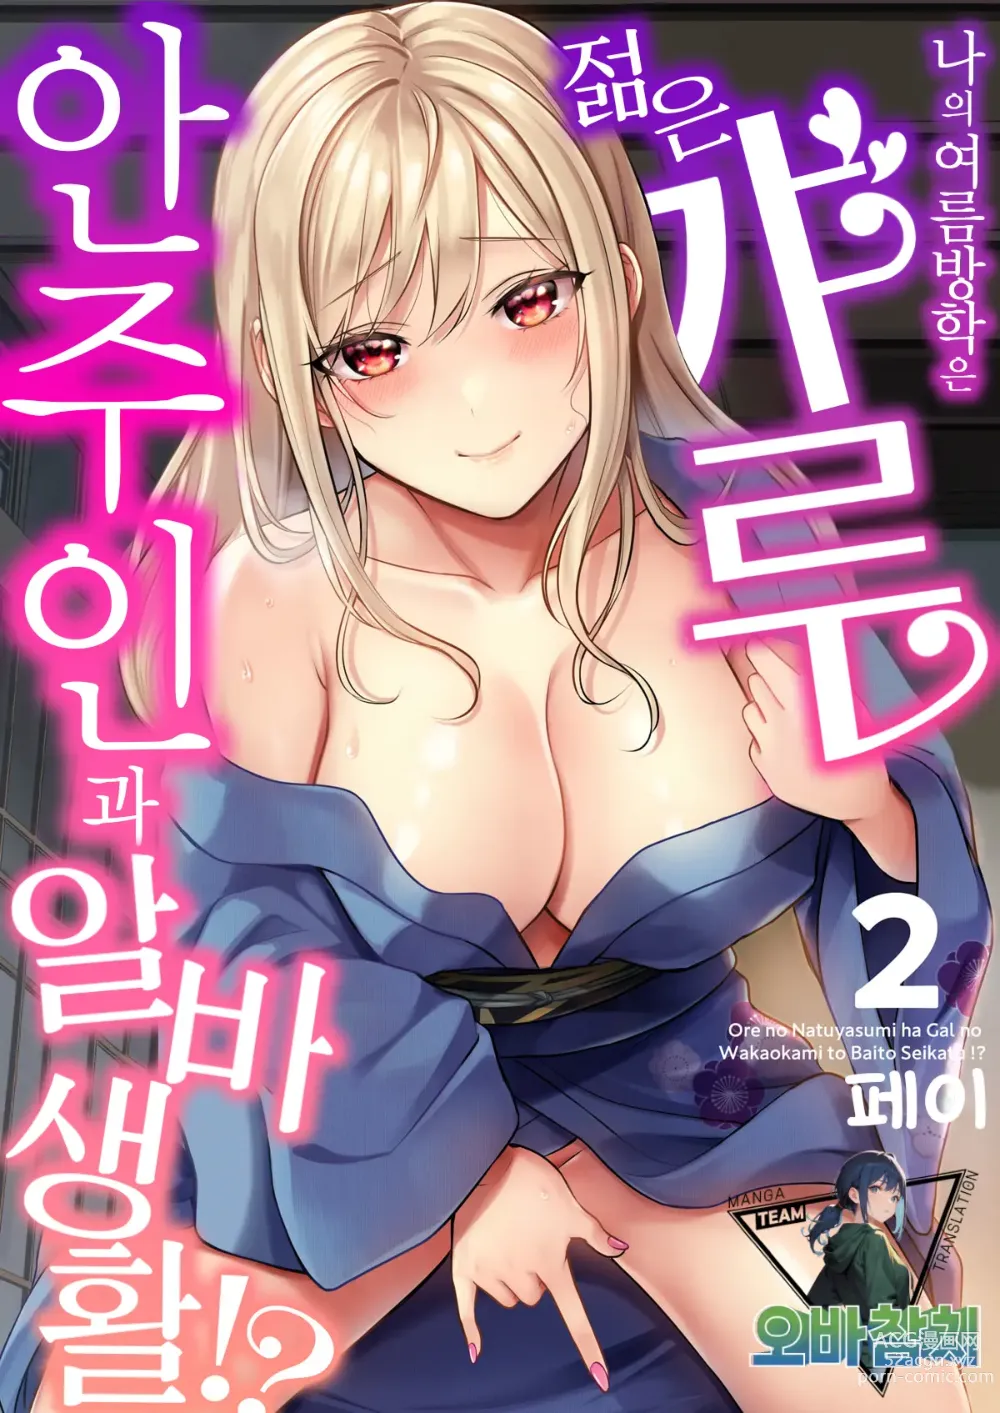 Page 1 of manga 내 여름방학은 젊은 갸루 안주인과 알바 생활?! 2